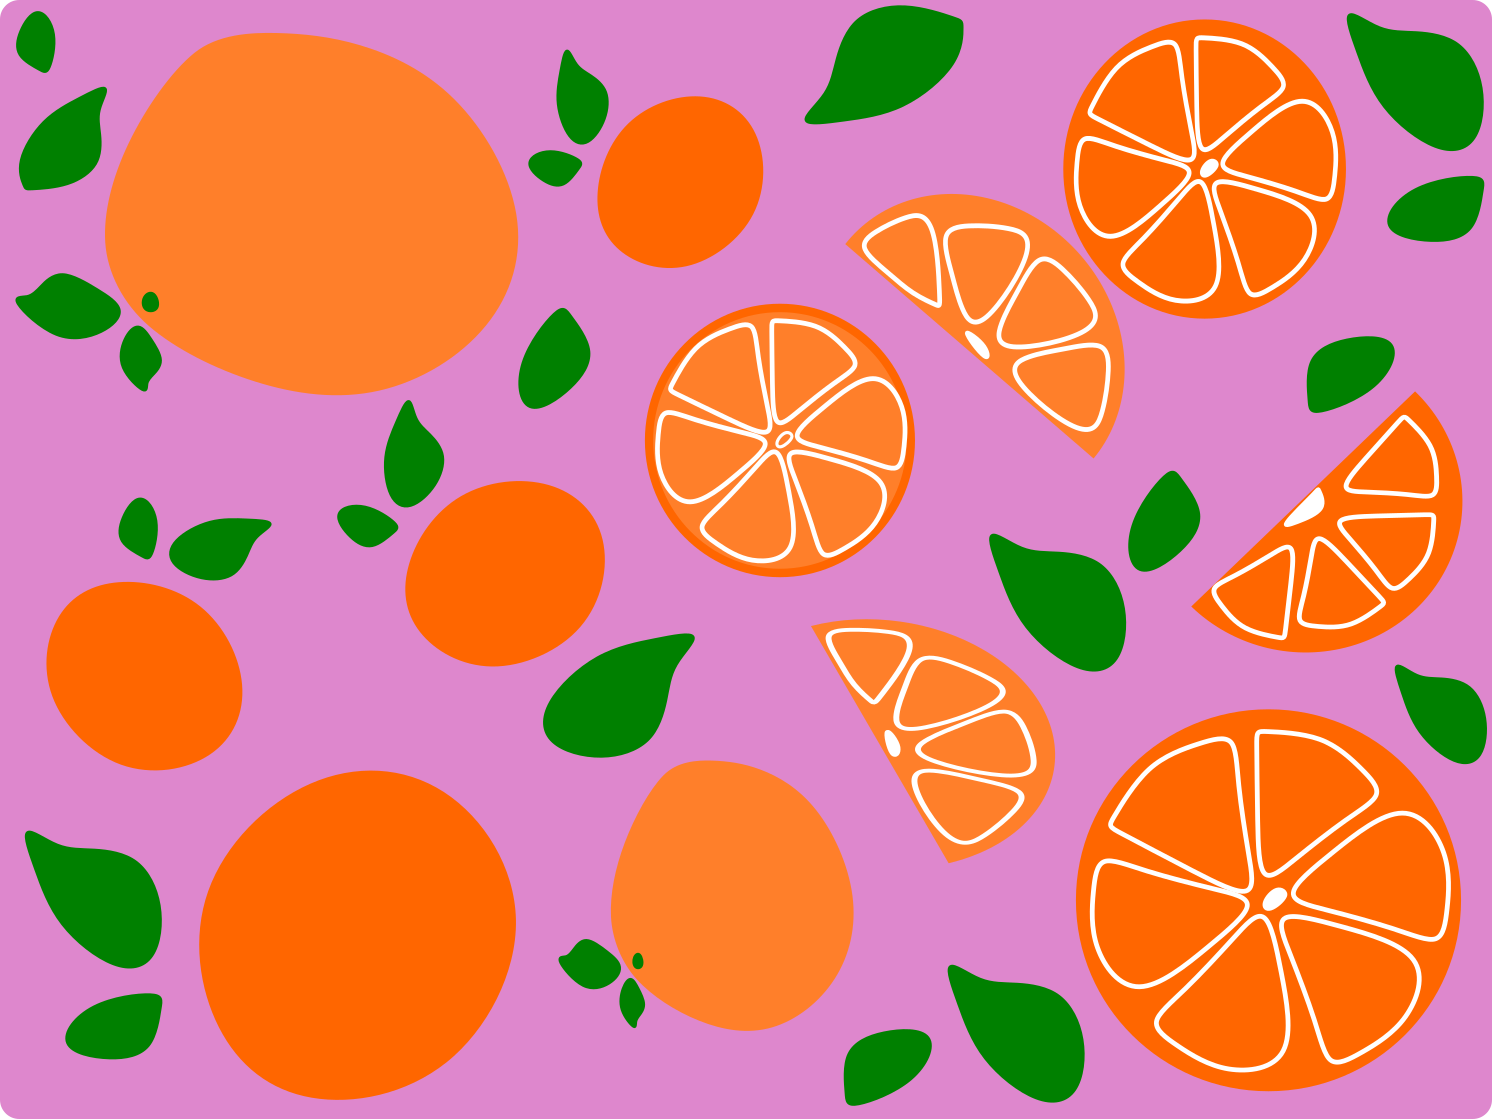 Oranges on a purple background